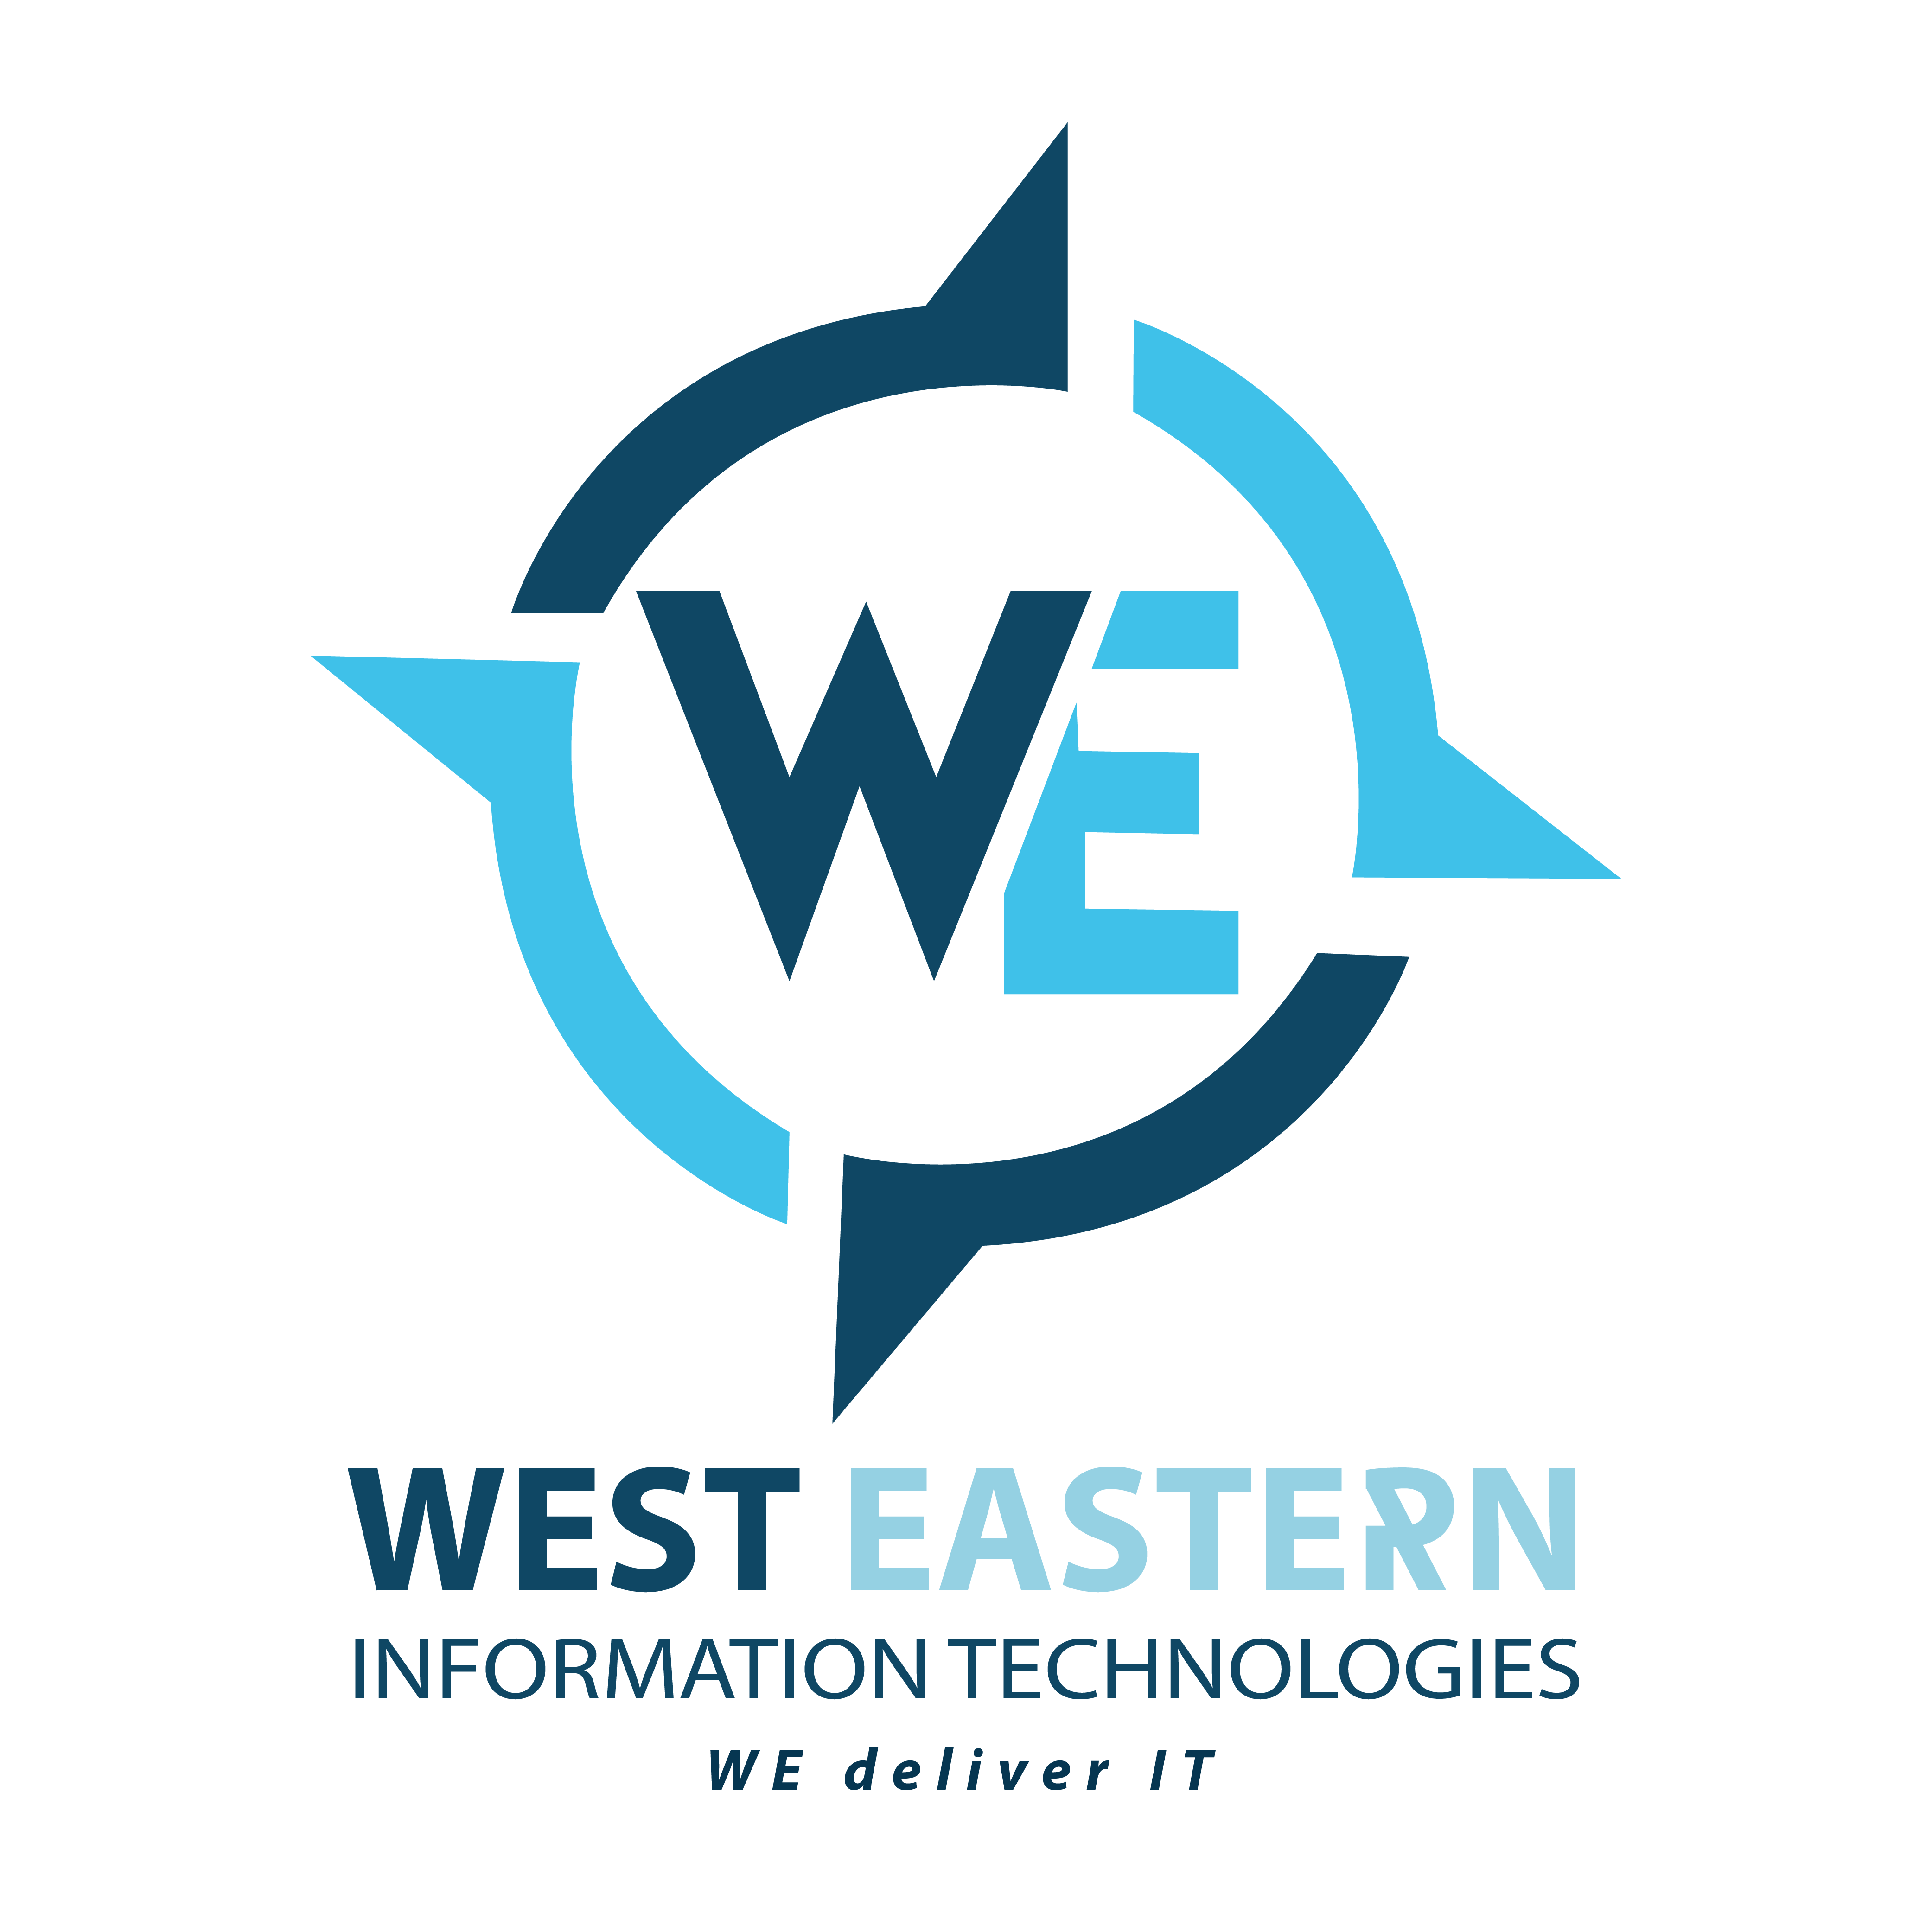 West Eastern Information Technologies